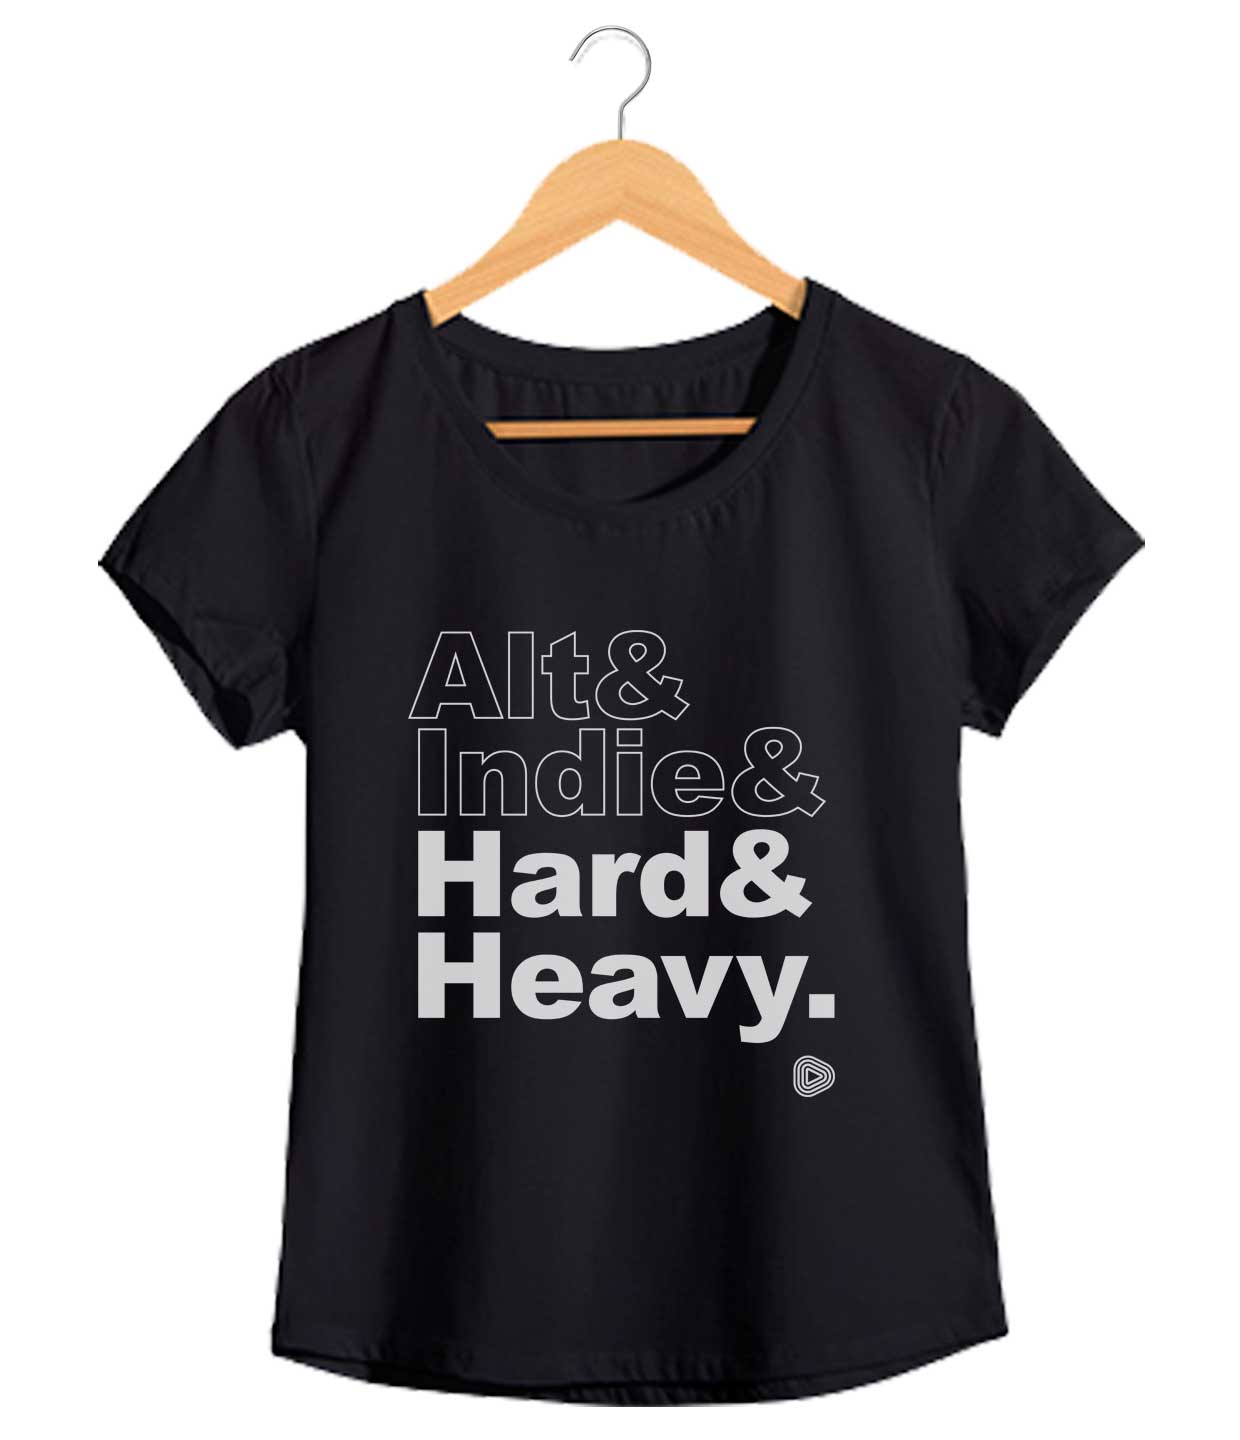 Camiseta Alt Indie Hard Heavy - Feminino